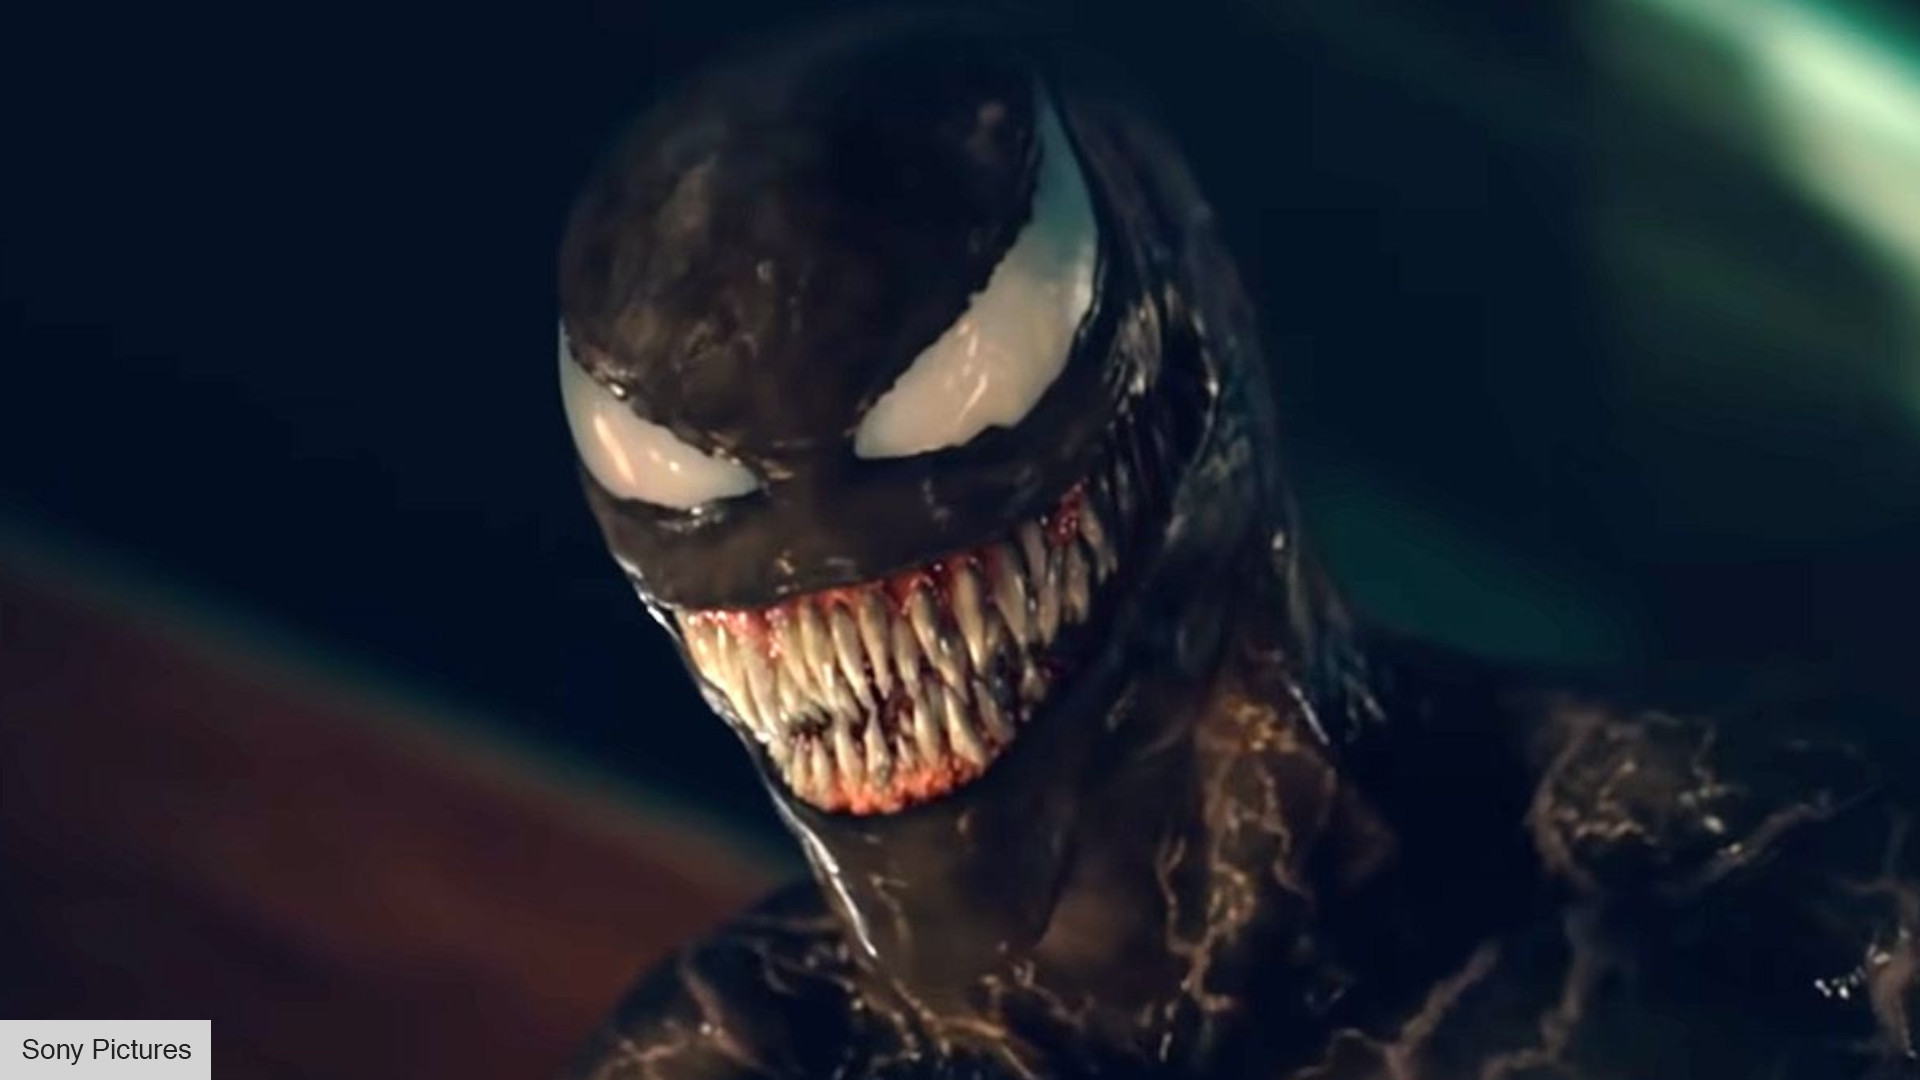 Venom 3 release date speculation, trailer, cast, and more